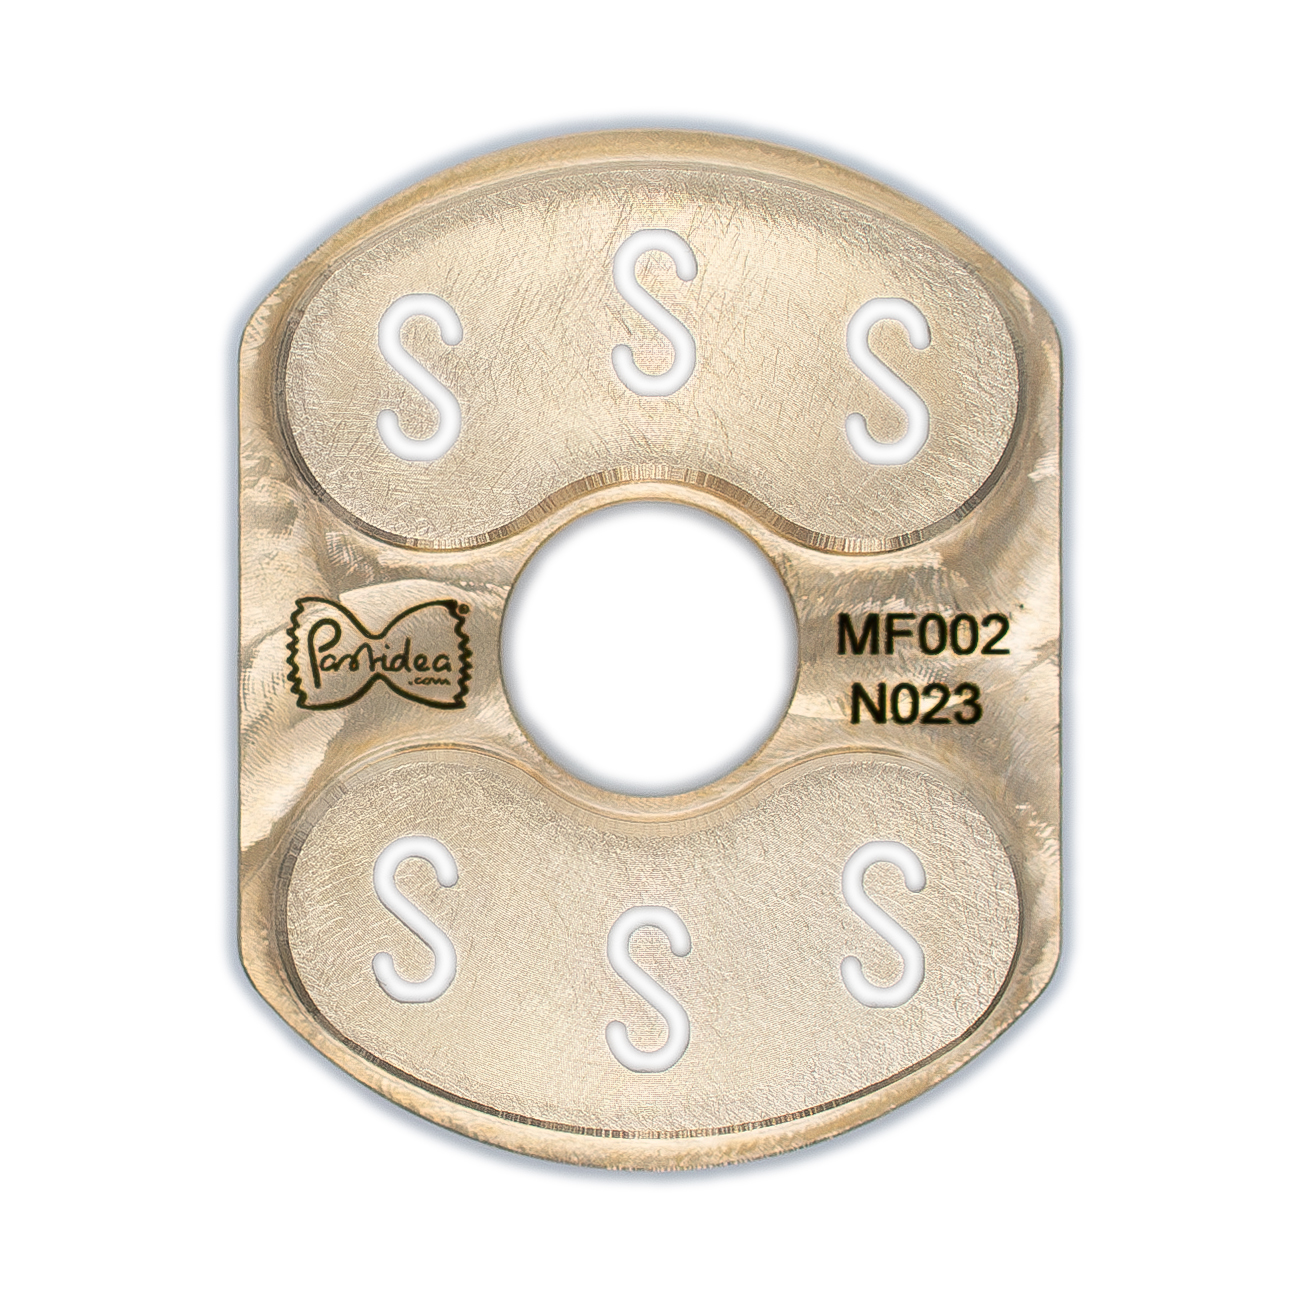 Pasta insert (type 2) in bronze spaghetti quadri chitarra 2,5x2,5mm for Philips pasta maker Avance / 7000 series (insert holder required) (copy)